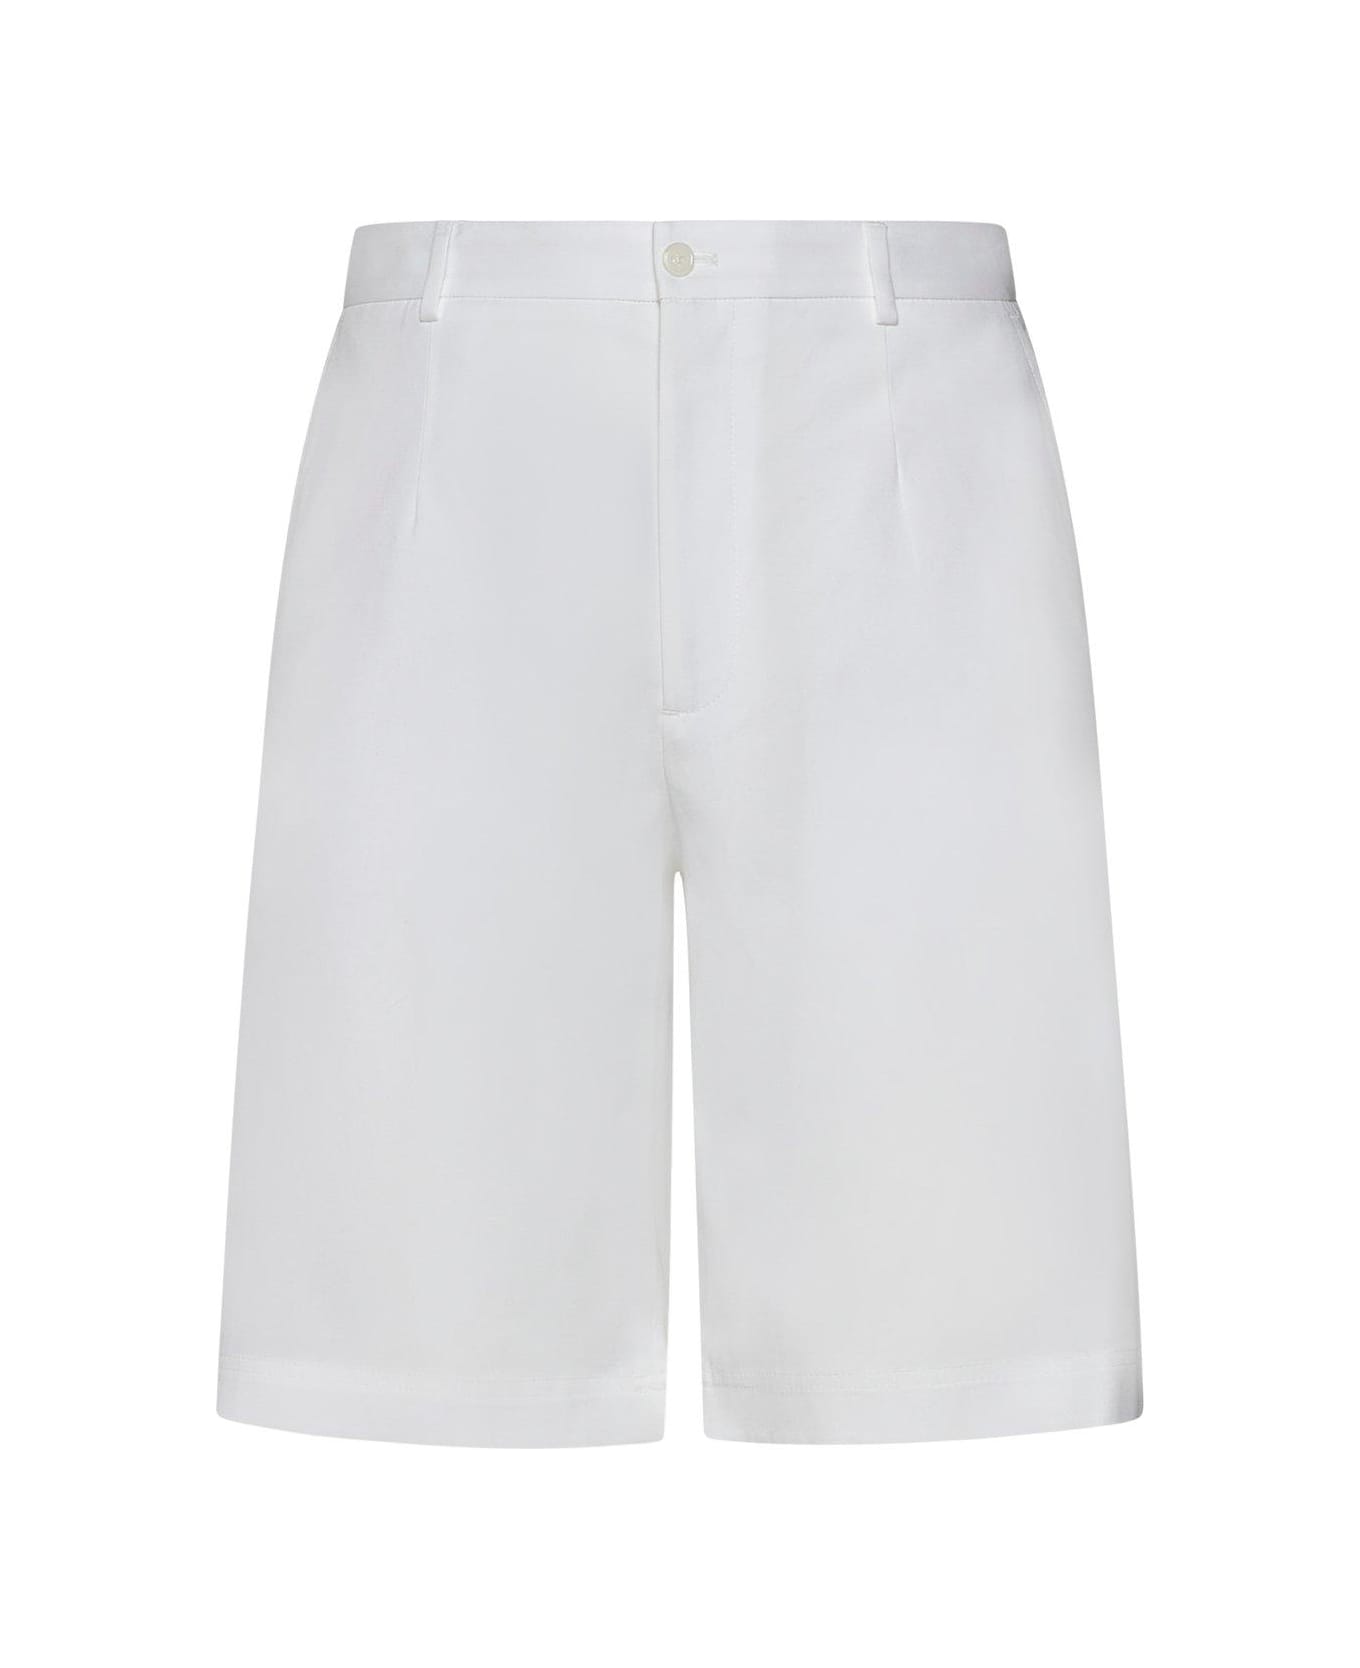 Dolce & Gabbana Branded Tag Shorts - White